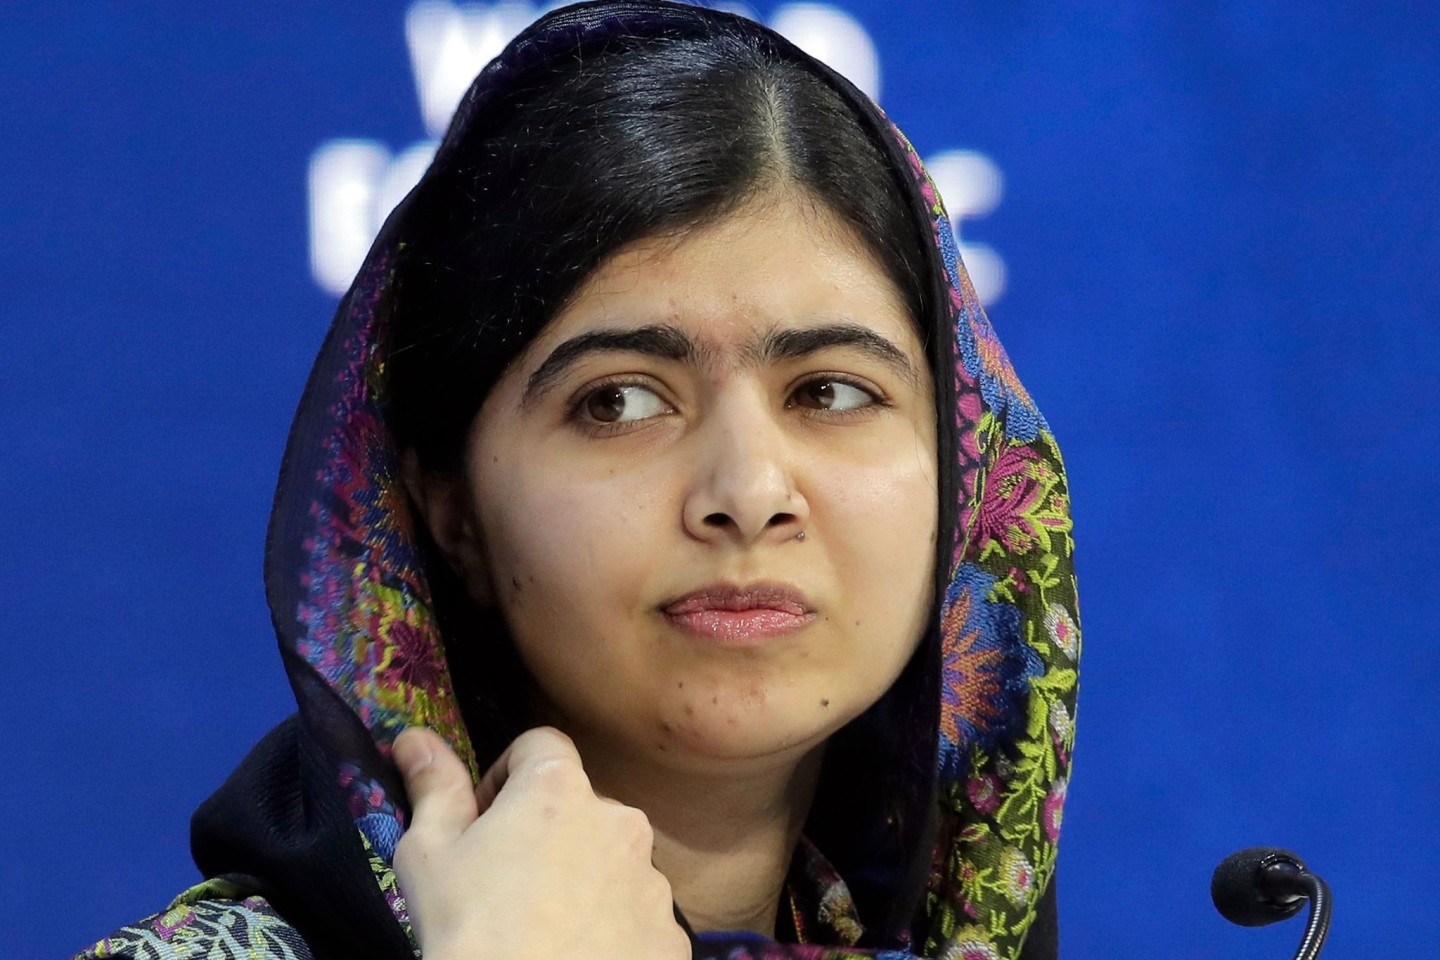 Malala Yousafzai hat ihr Studium abgeschlossen.